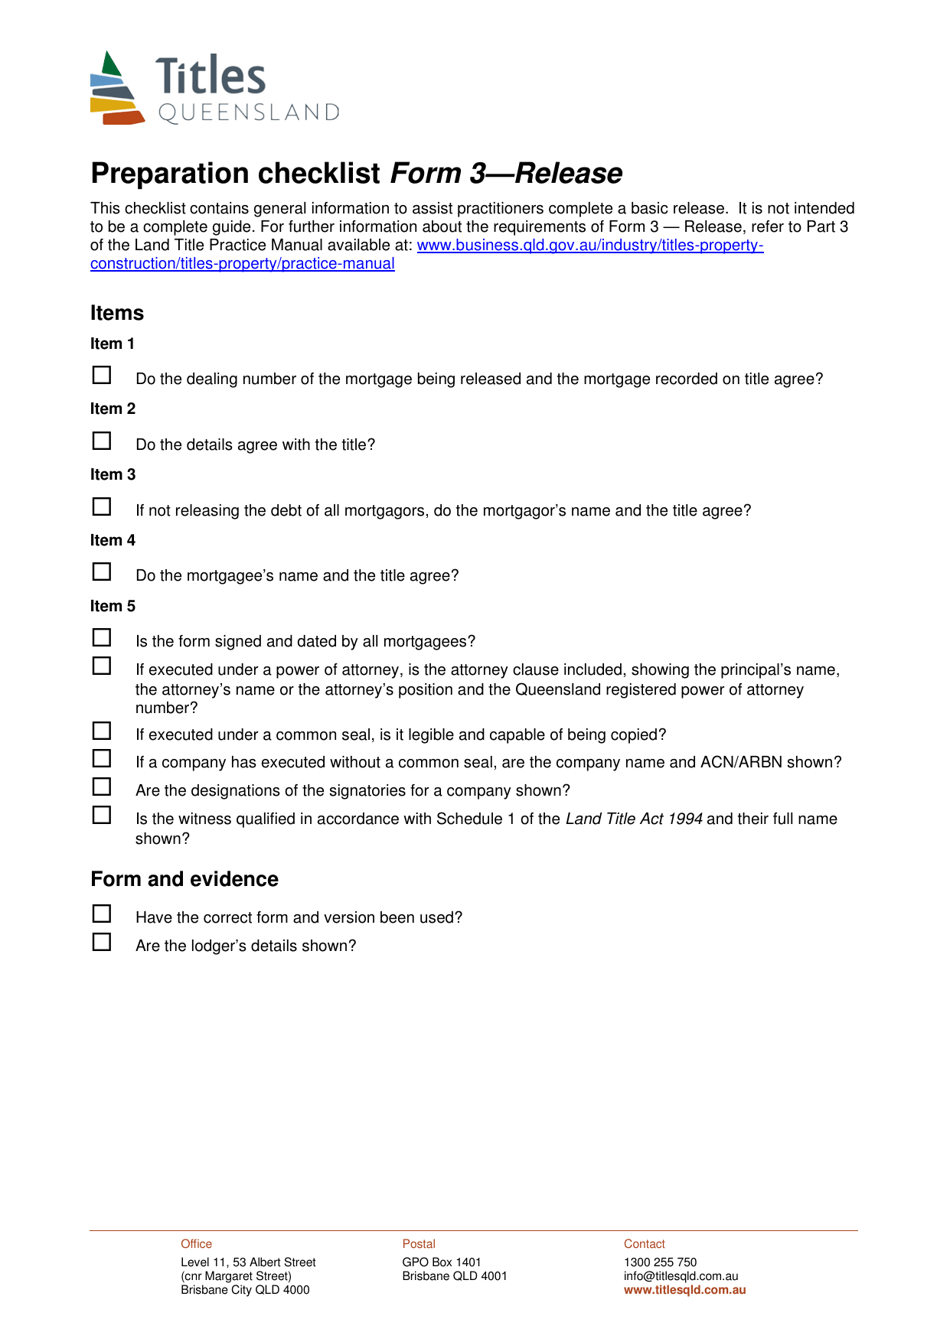 Form 3 Preparation Checklist - Release - Queensland, Australia, Page 1